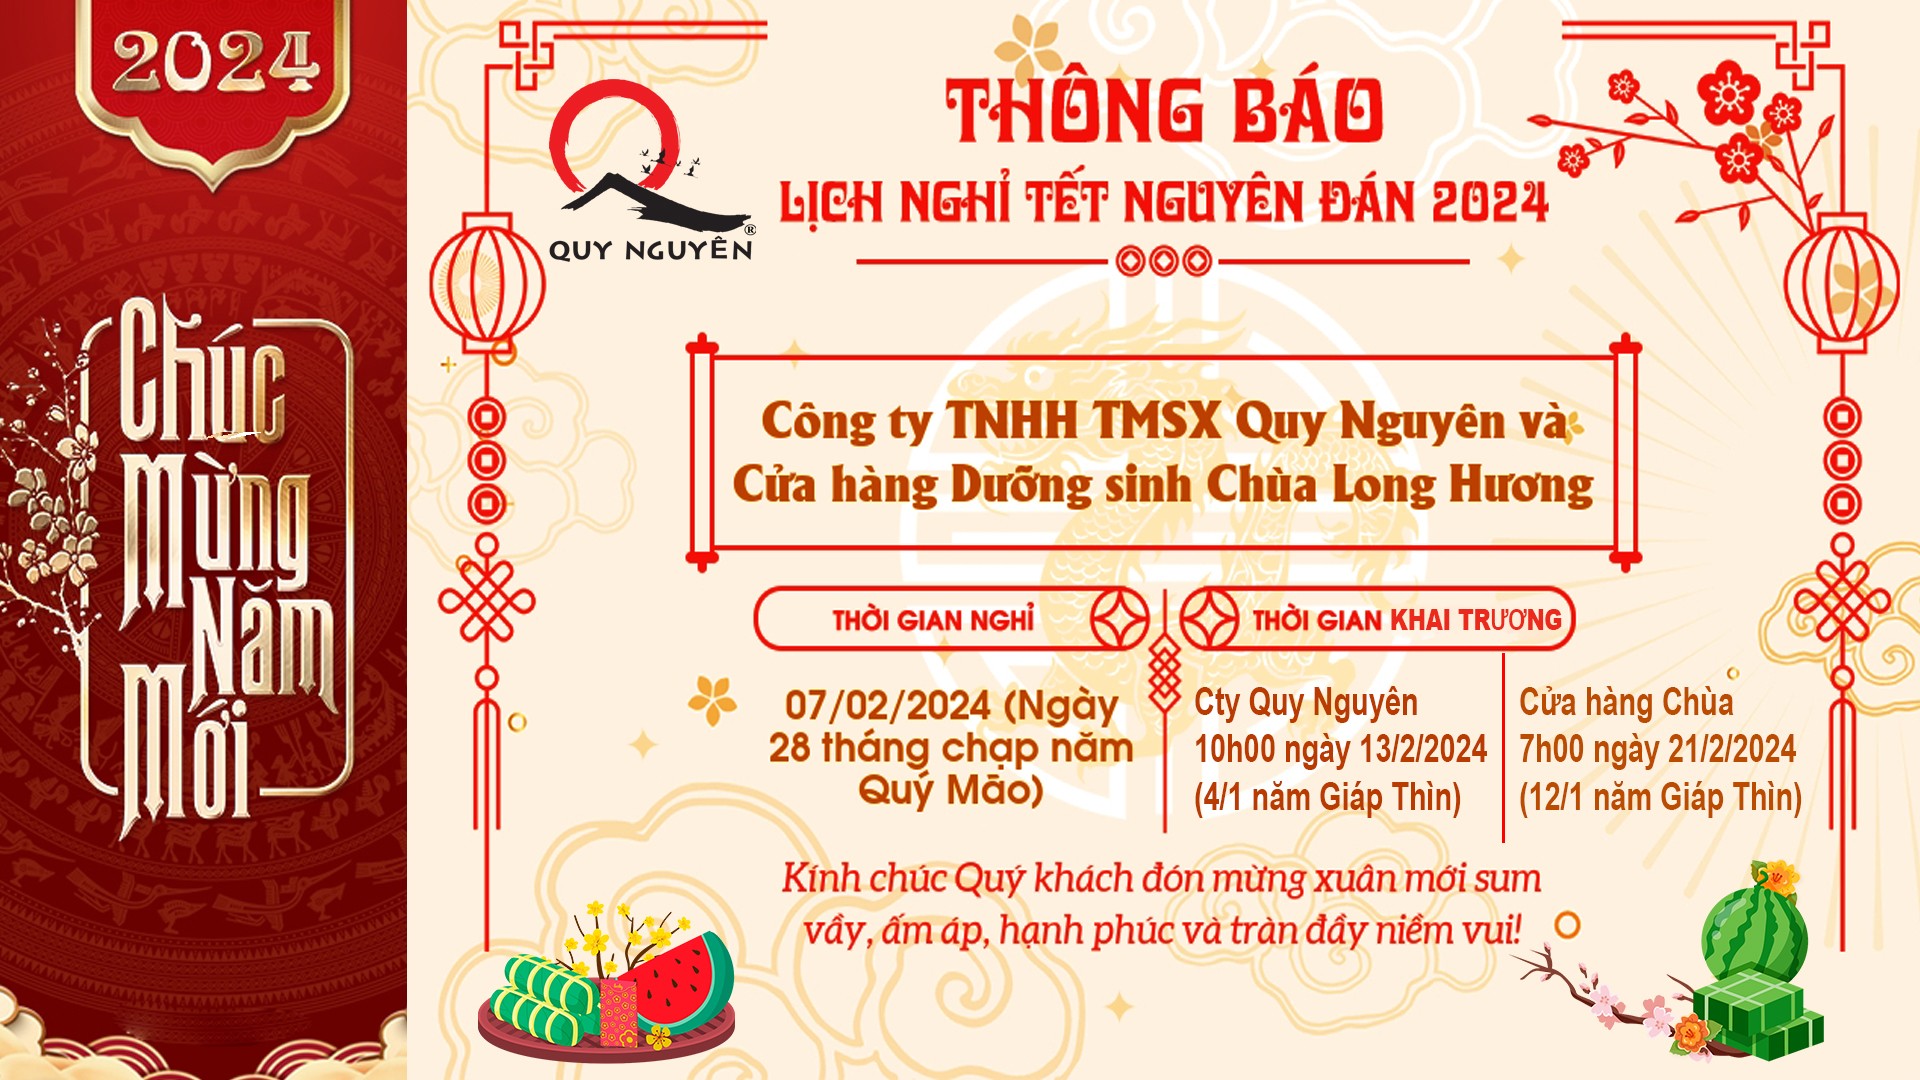 Thong Bao Nghi Tet 2024 V4